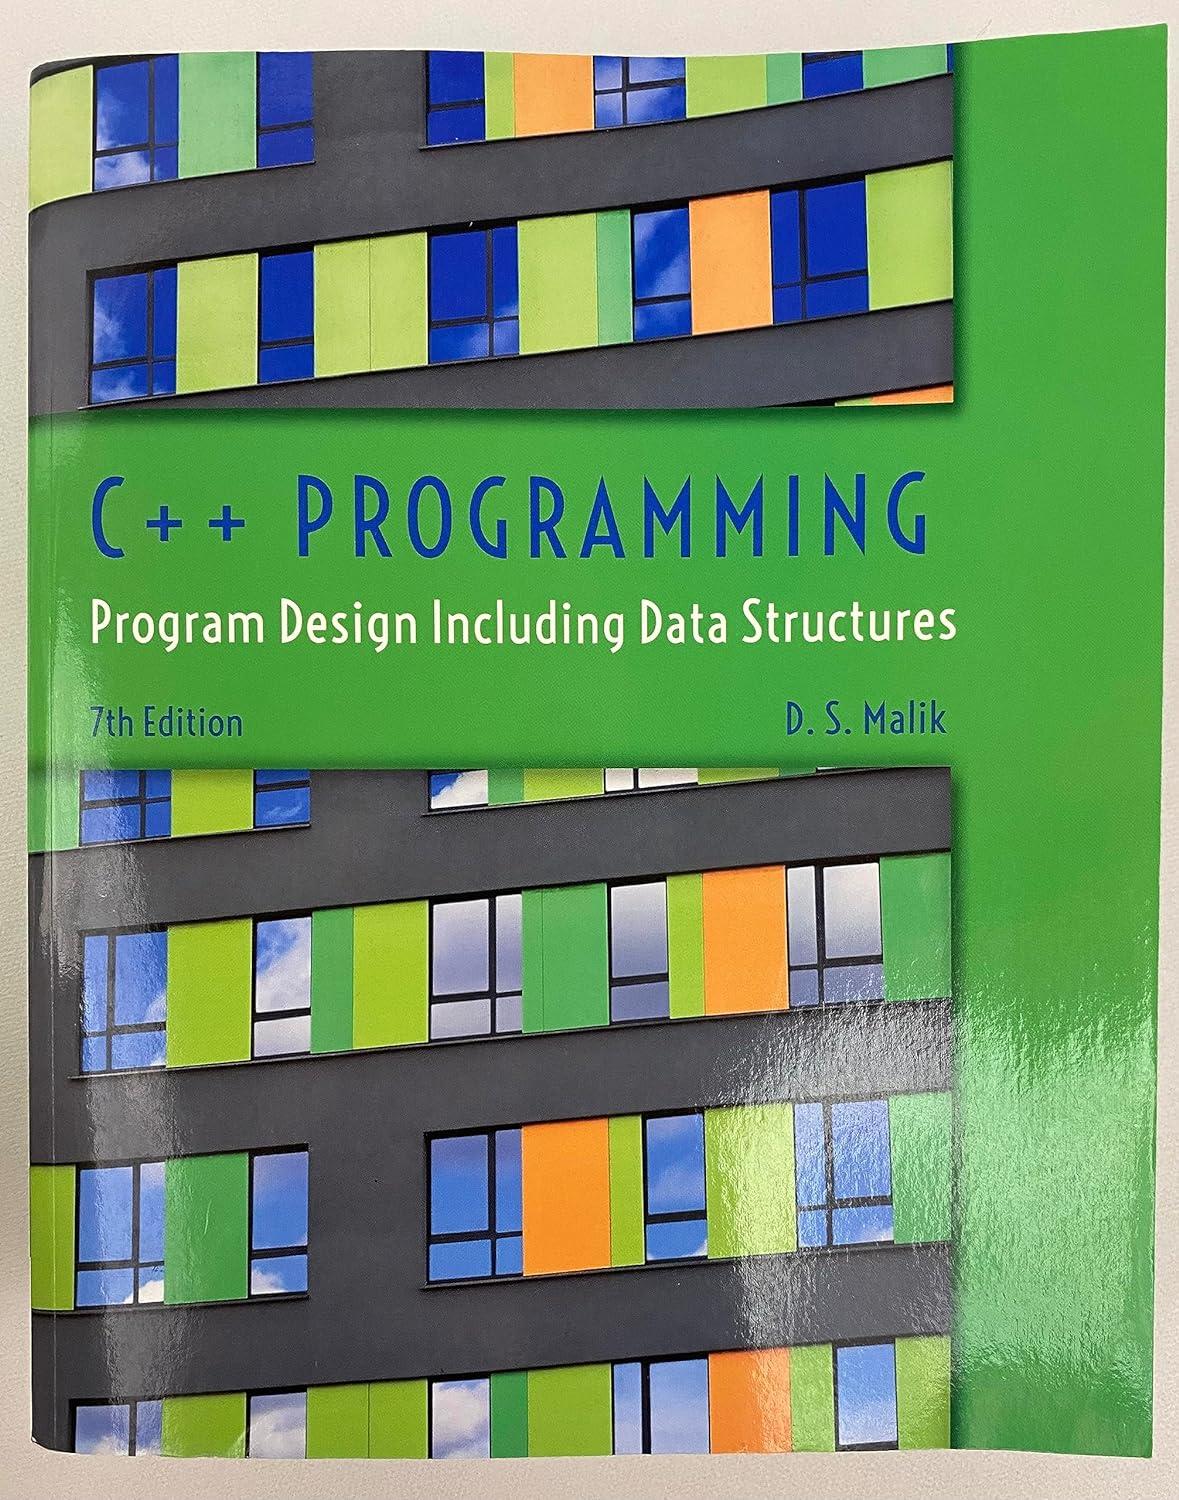 c++ programming program design including data structures 7th edition d. s. malik 1285852753, 978-1285852751